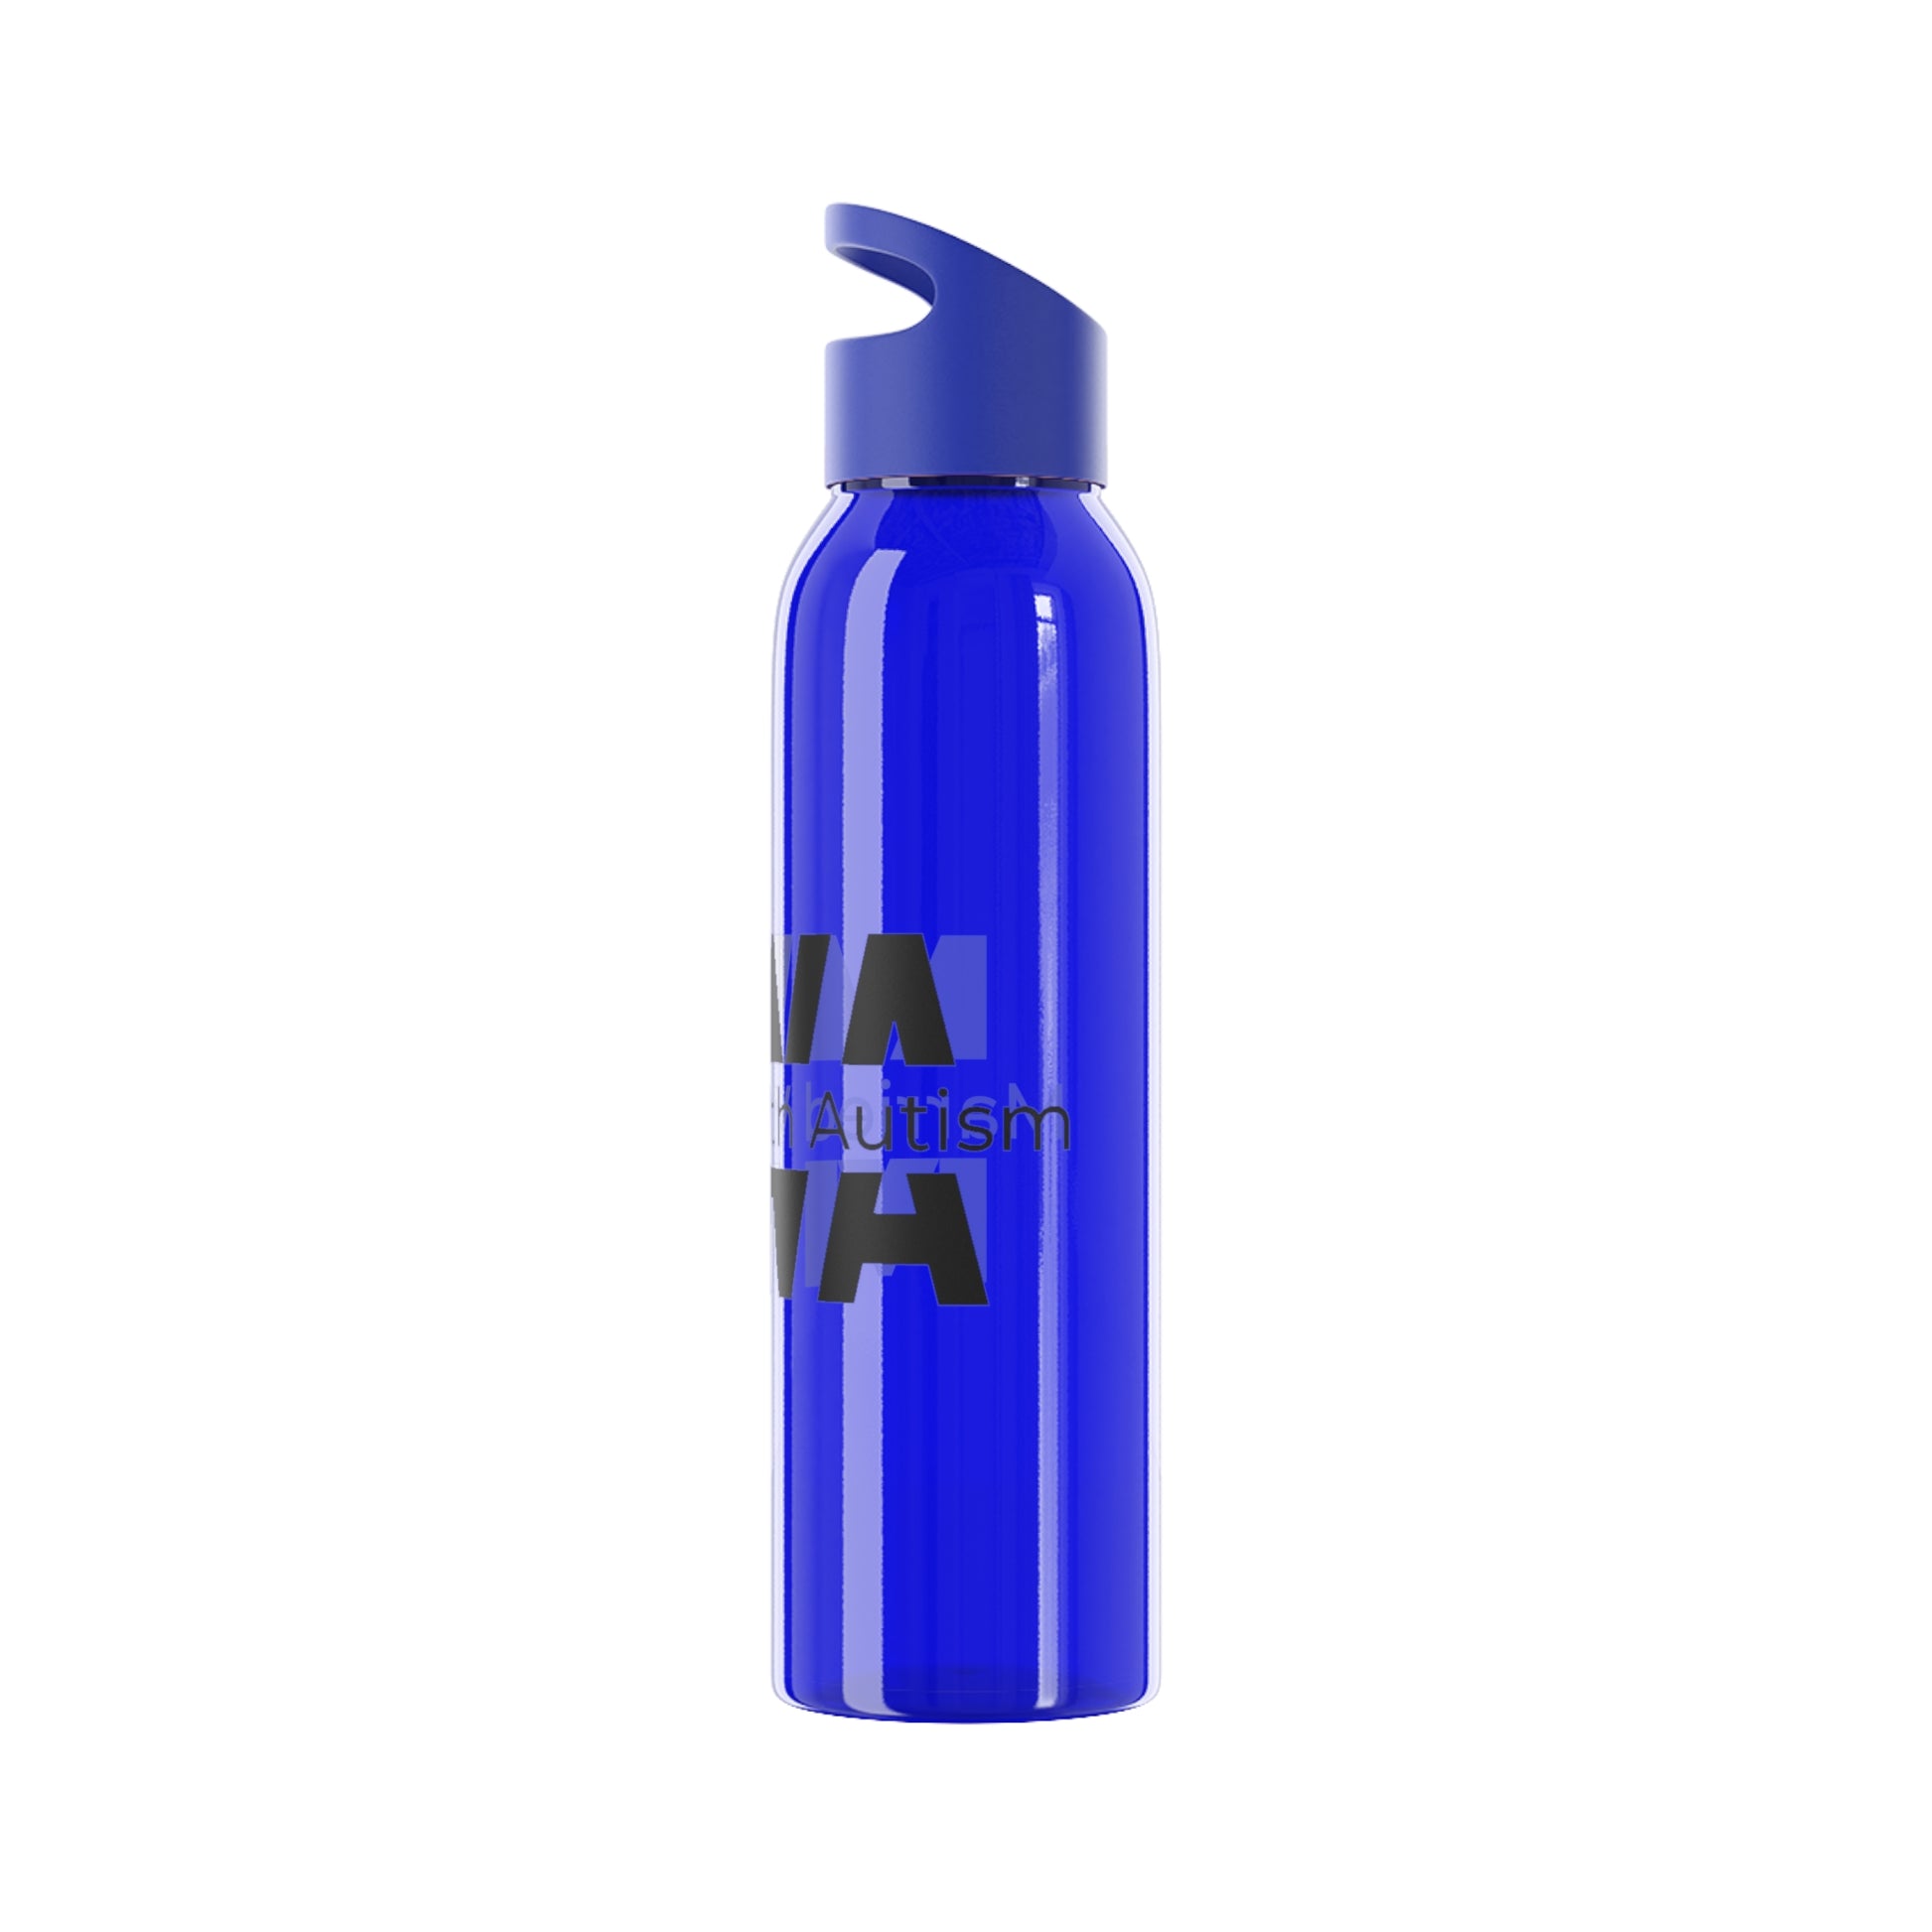 Customizable Reusable Water Bottle